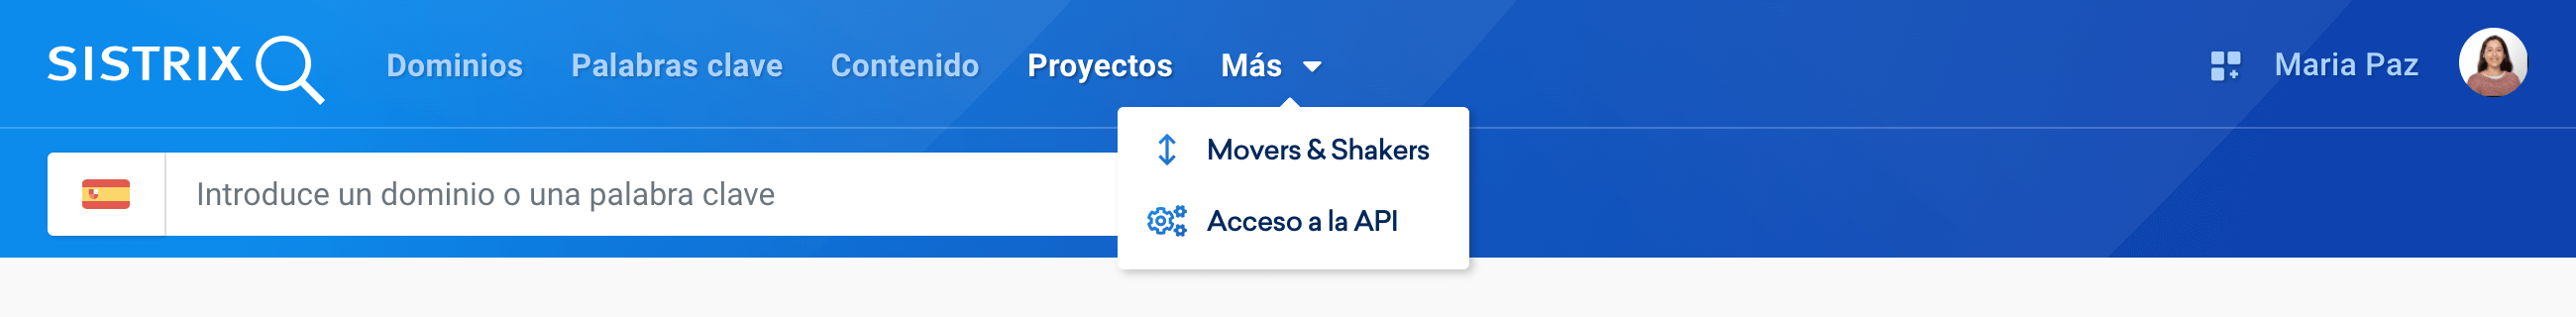 movers and shakers barra de búsqueda